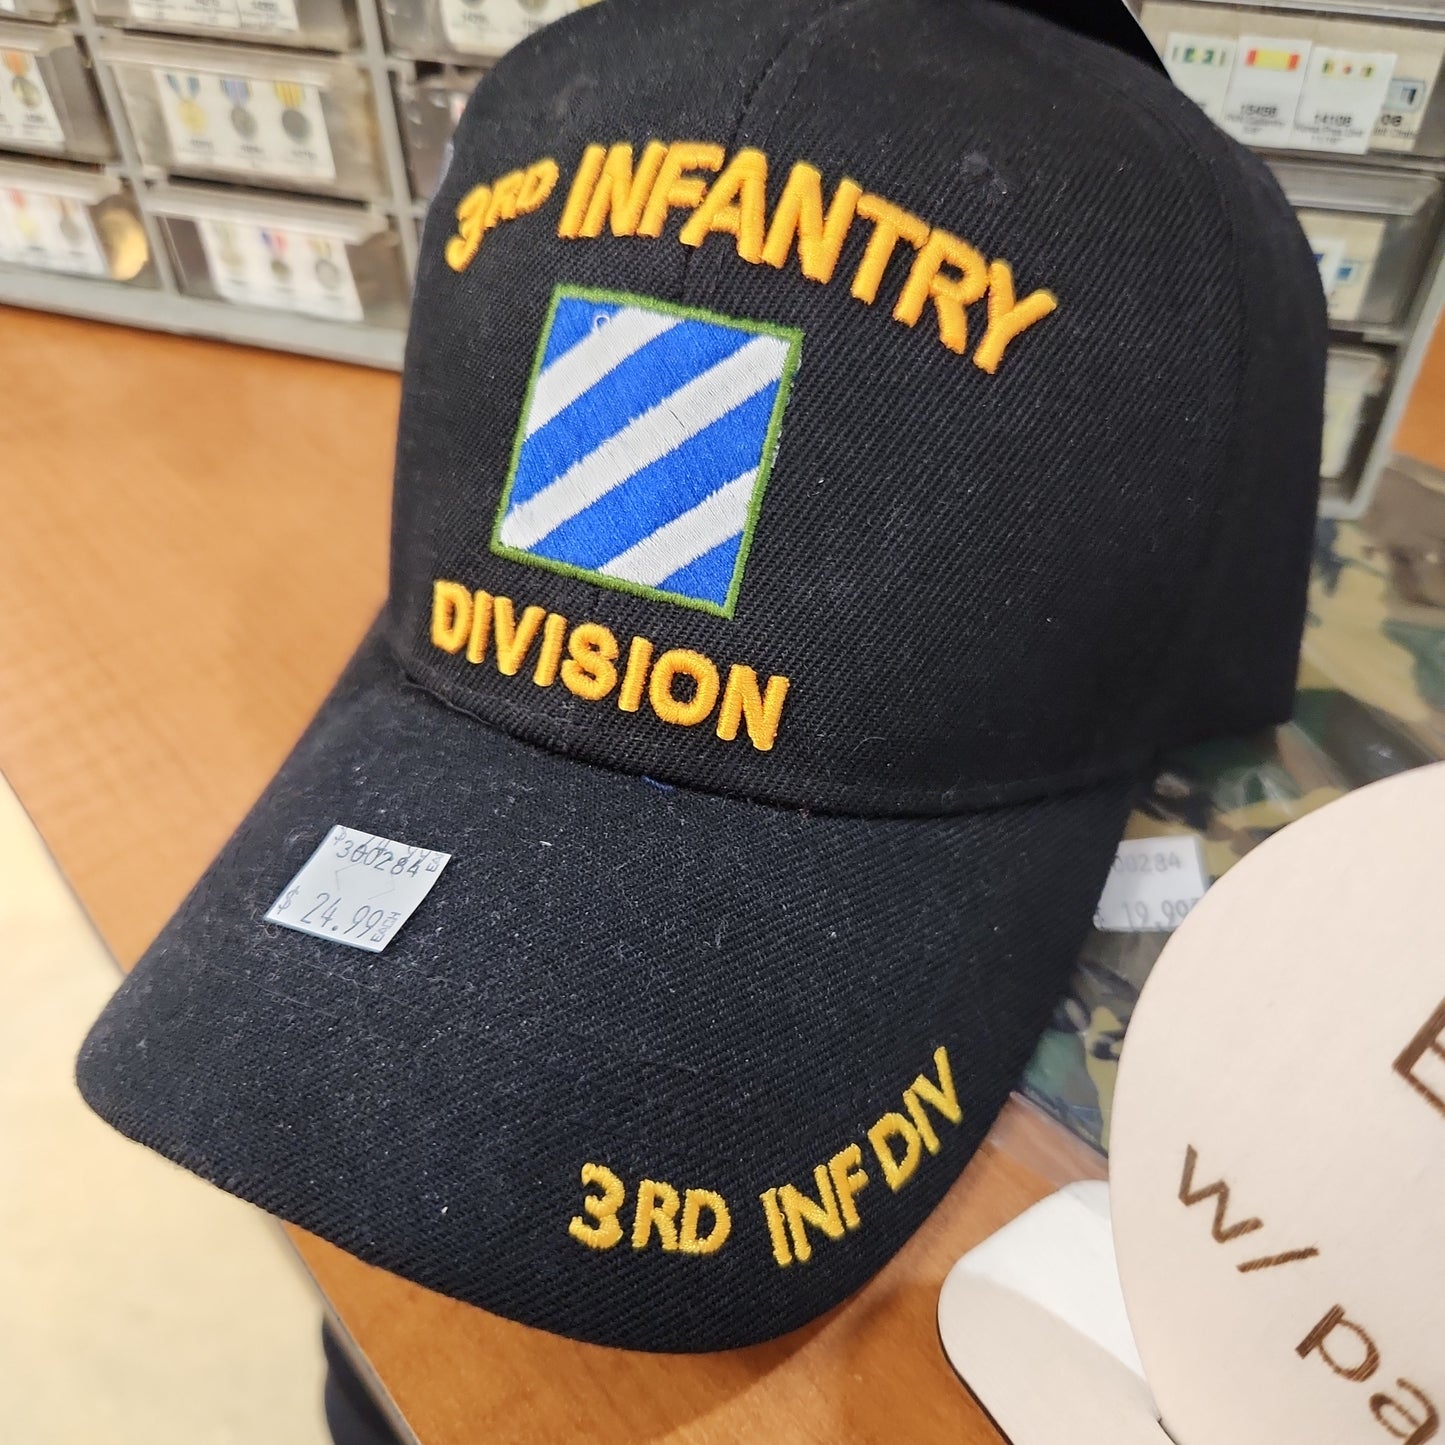 3rd infantry